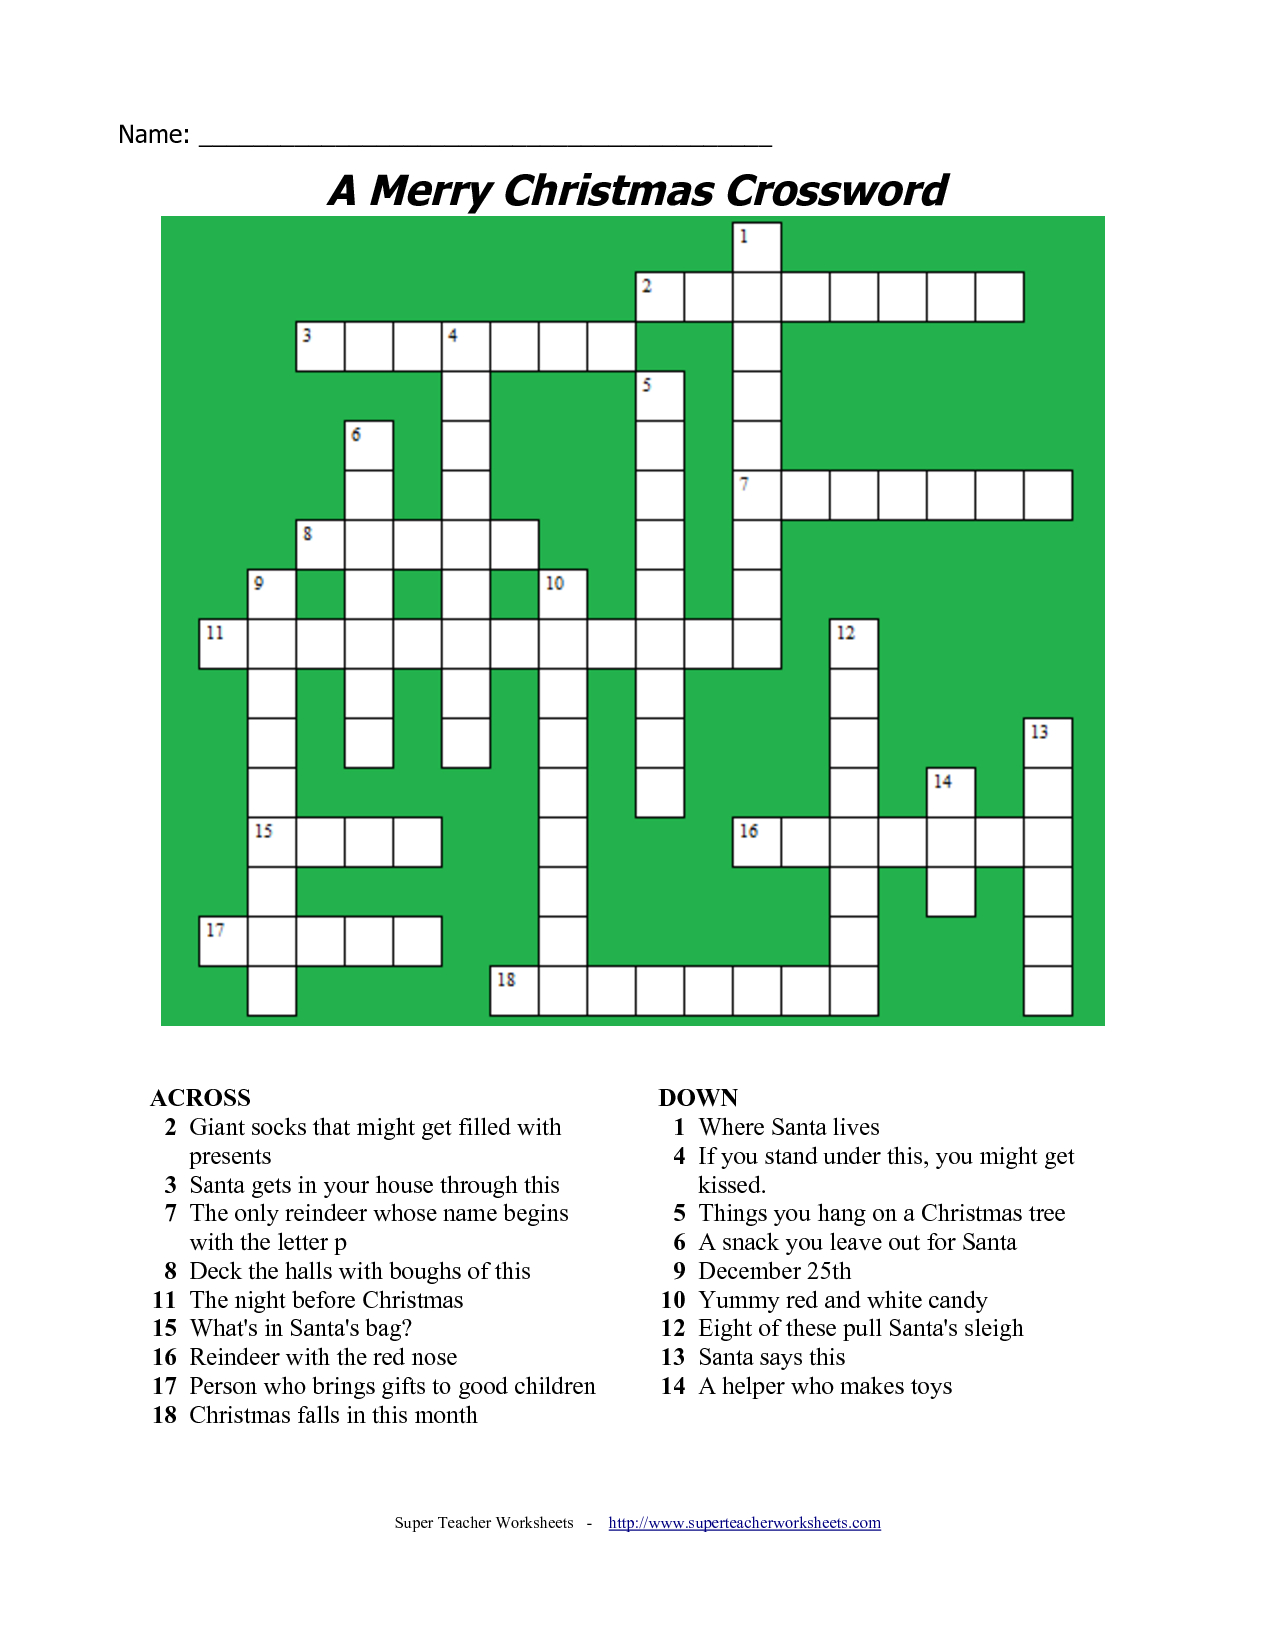 20 Fun Printable Christmas Crossword Puzzles | Kittybabylove - Printable Xmas Puzzles